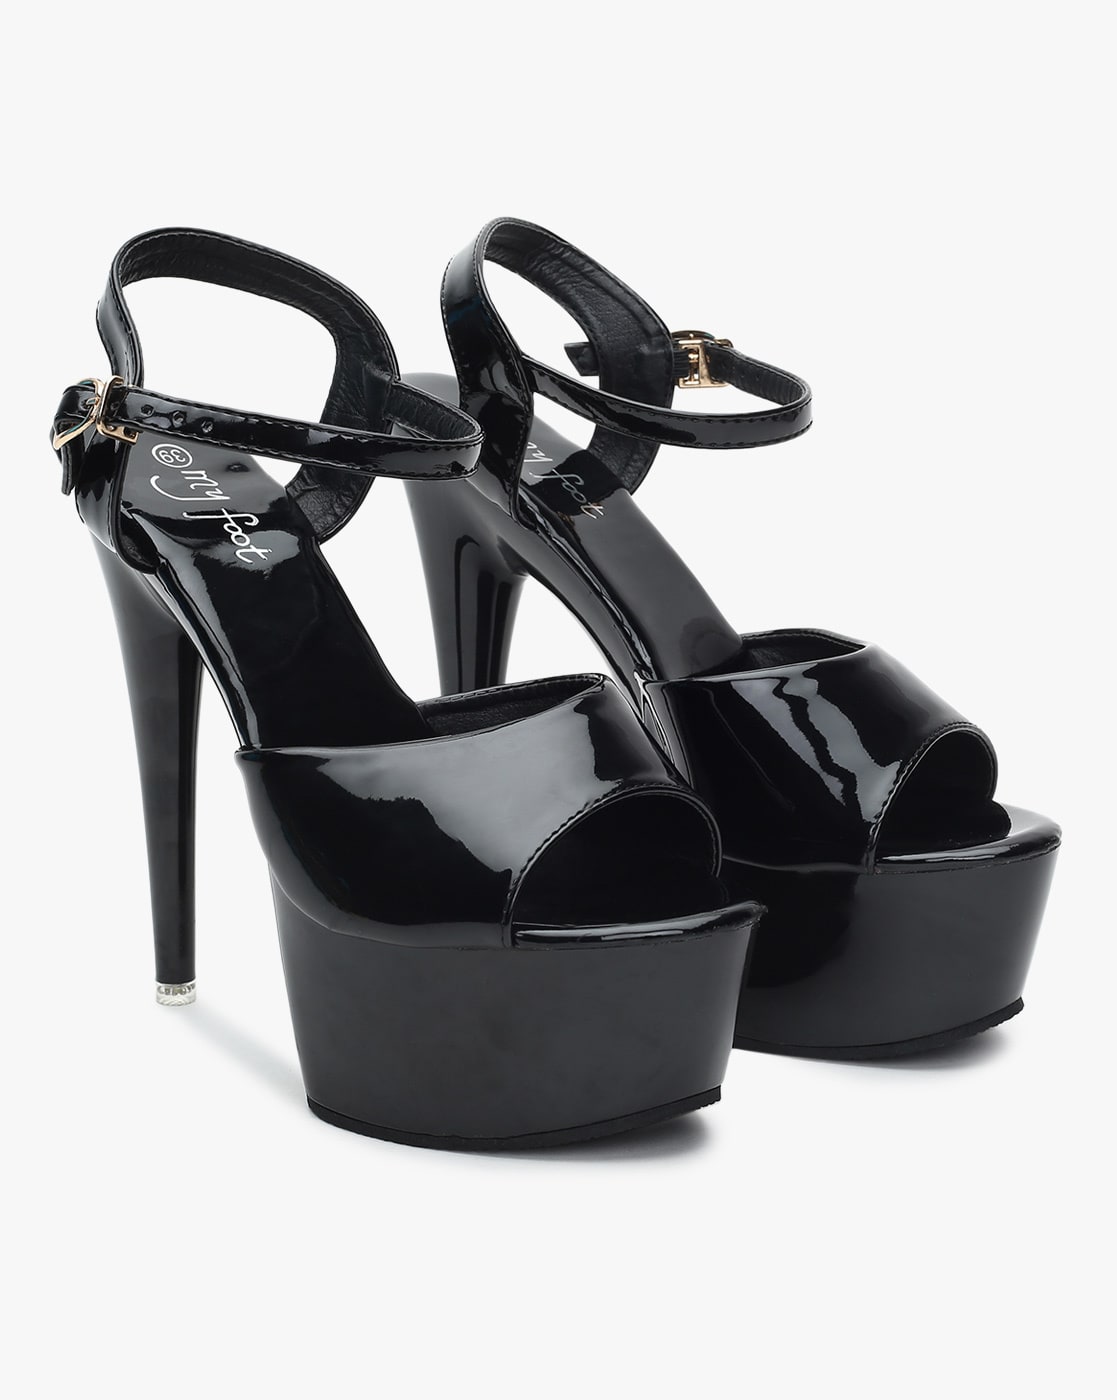 DOMINA-420 Devious 6 Inch Heel Black Patent Erotic Shoes – Pole Dancing  Shoes - KLS Supplies Ltd